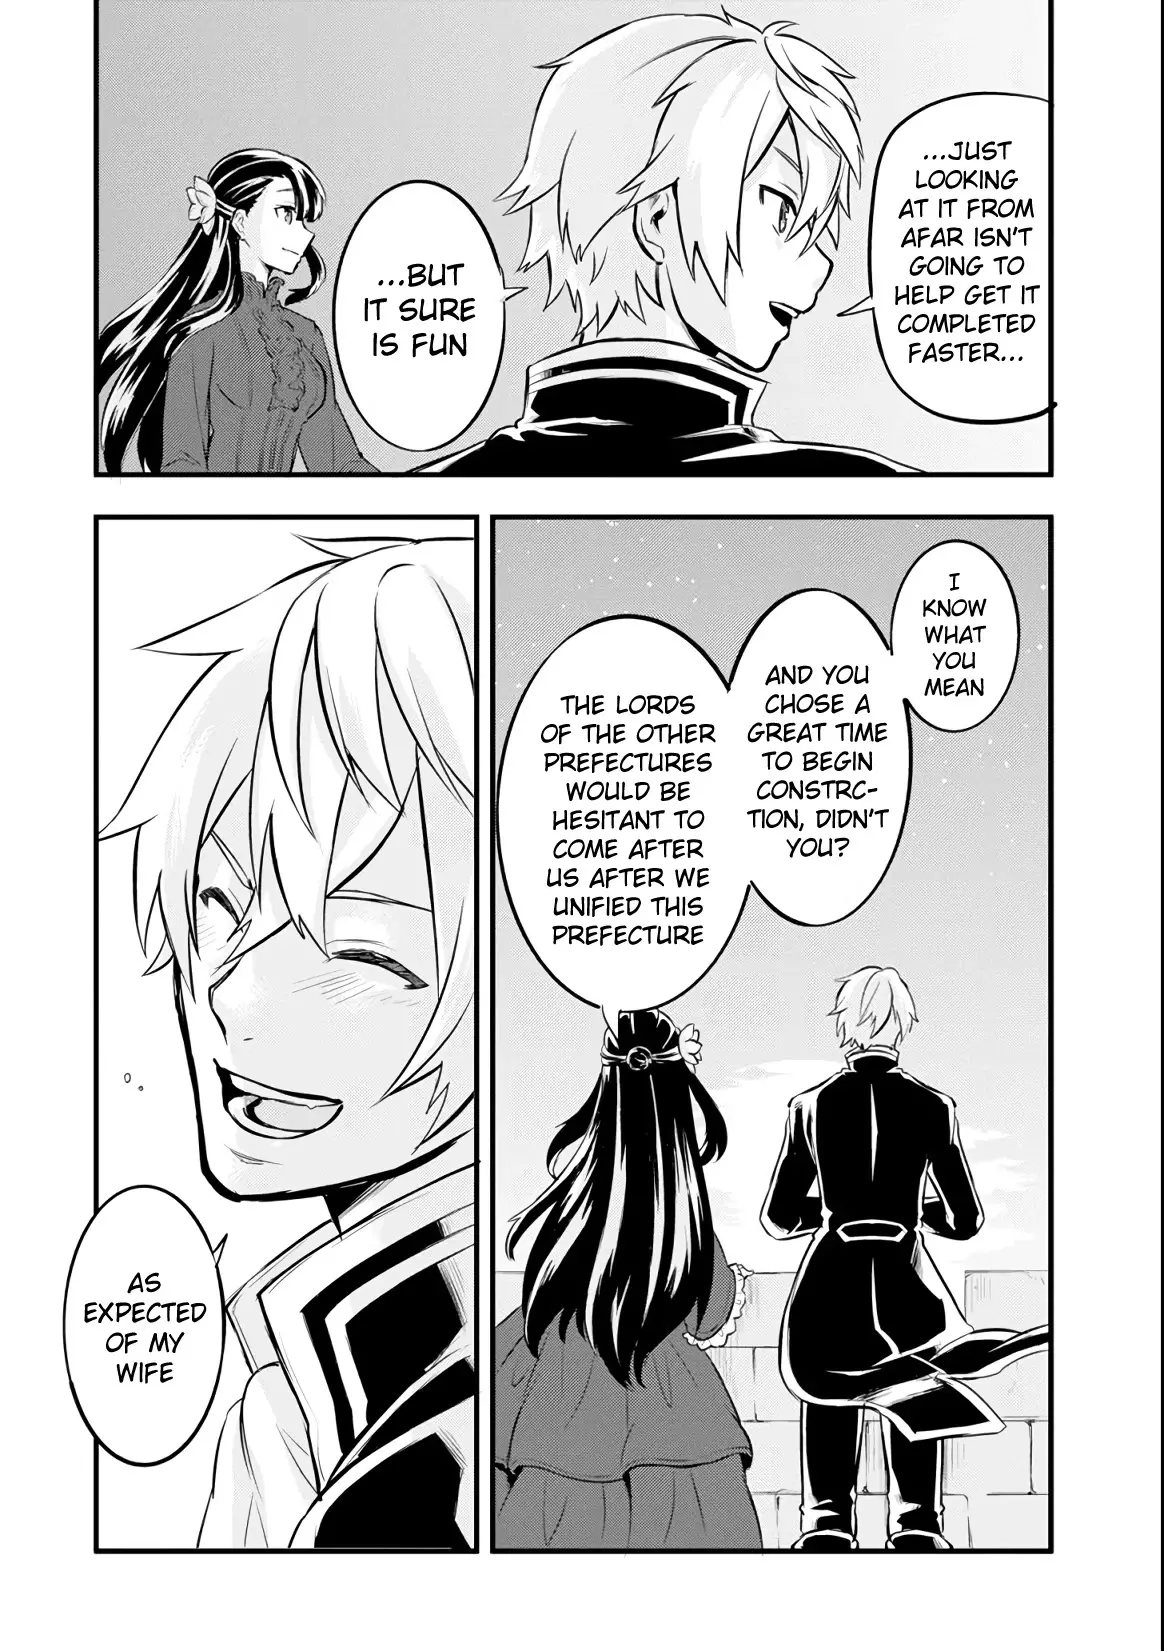 Mysterious Job Called Oda Nobunaga - 10 page 12